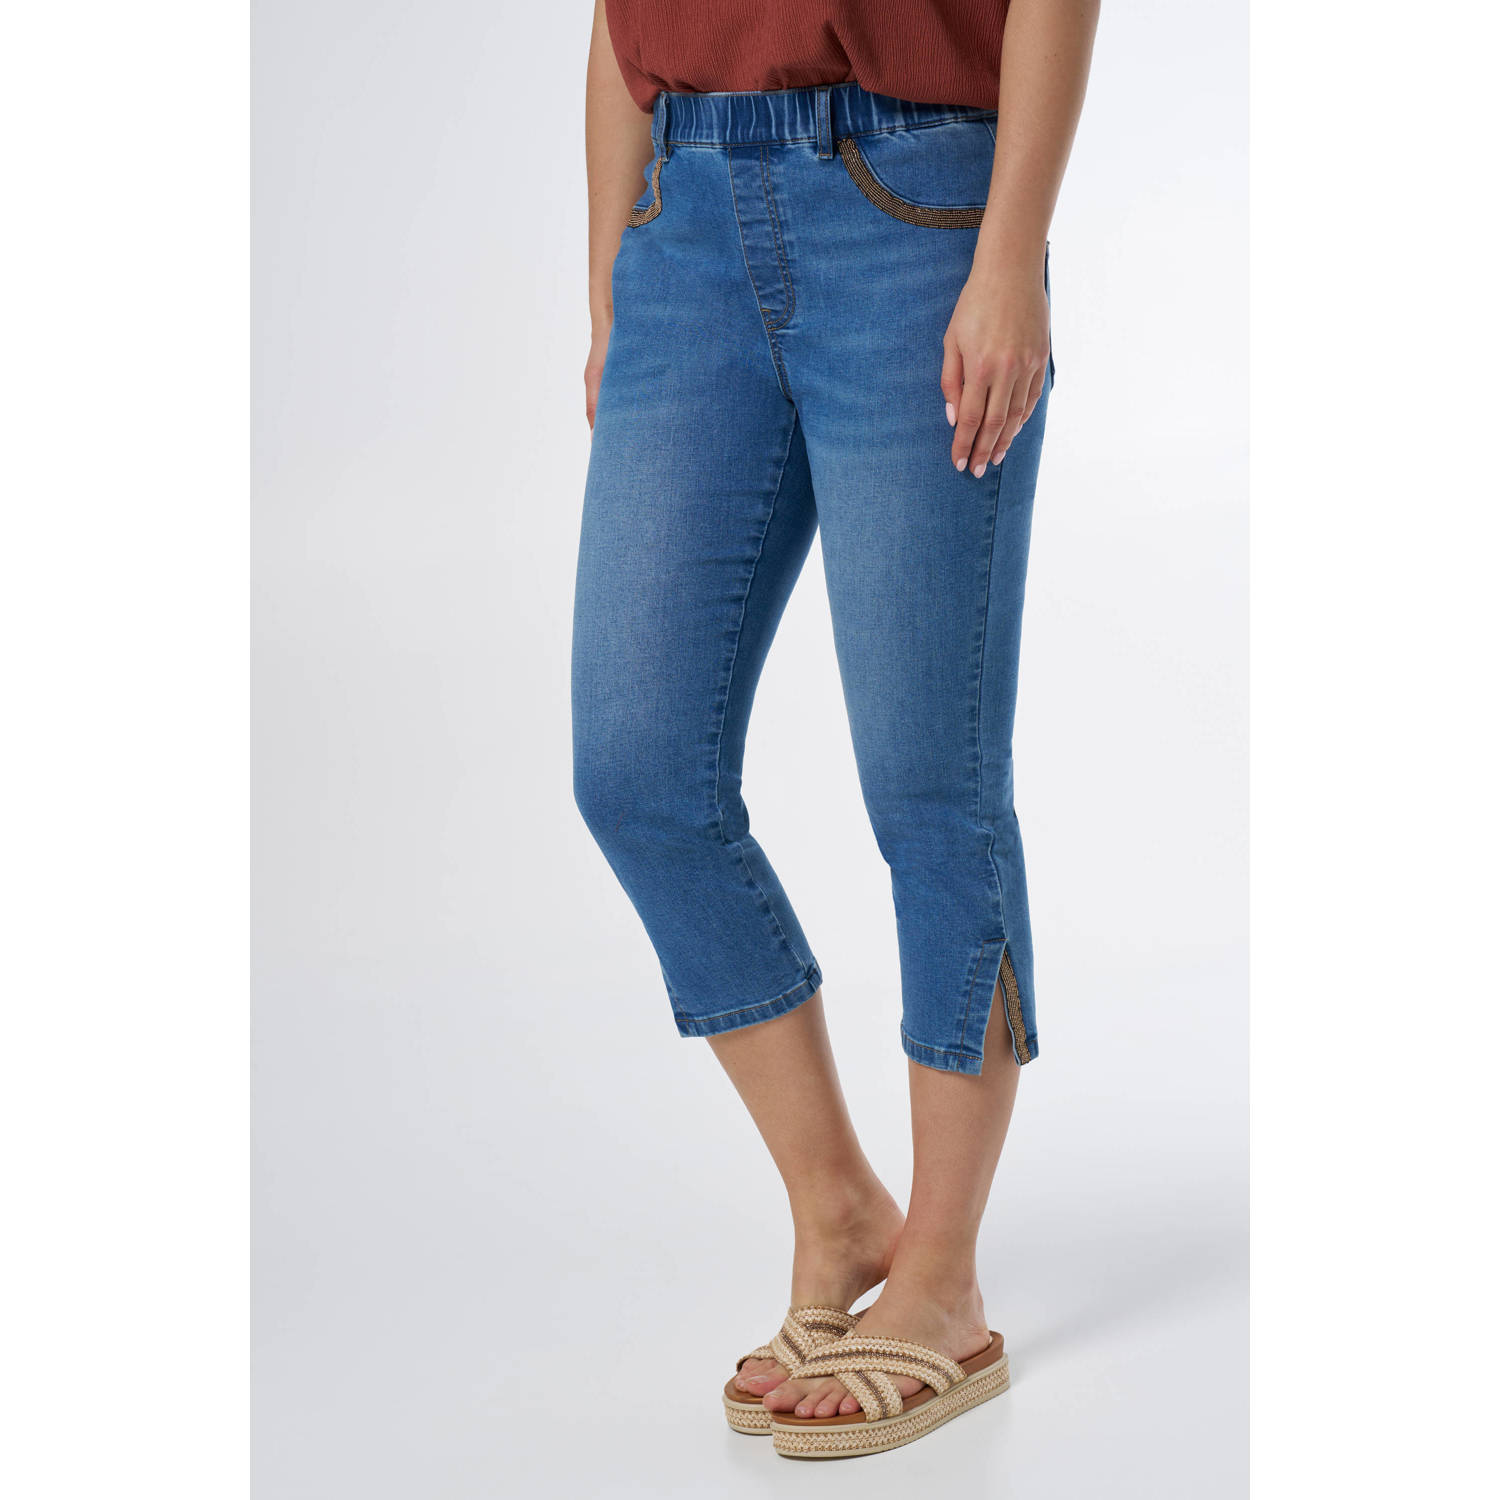 MS Mode capri jeans medium blue denim